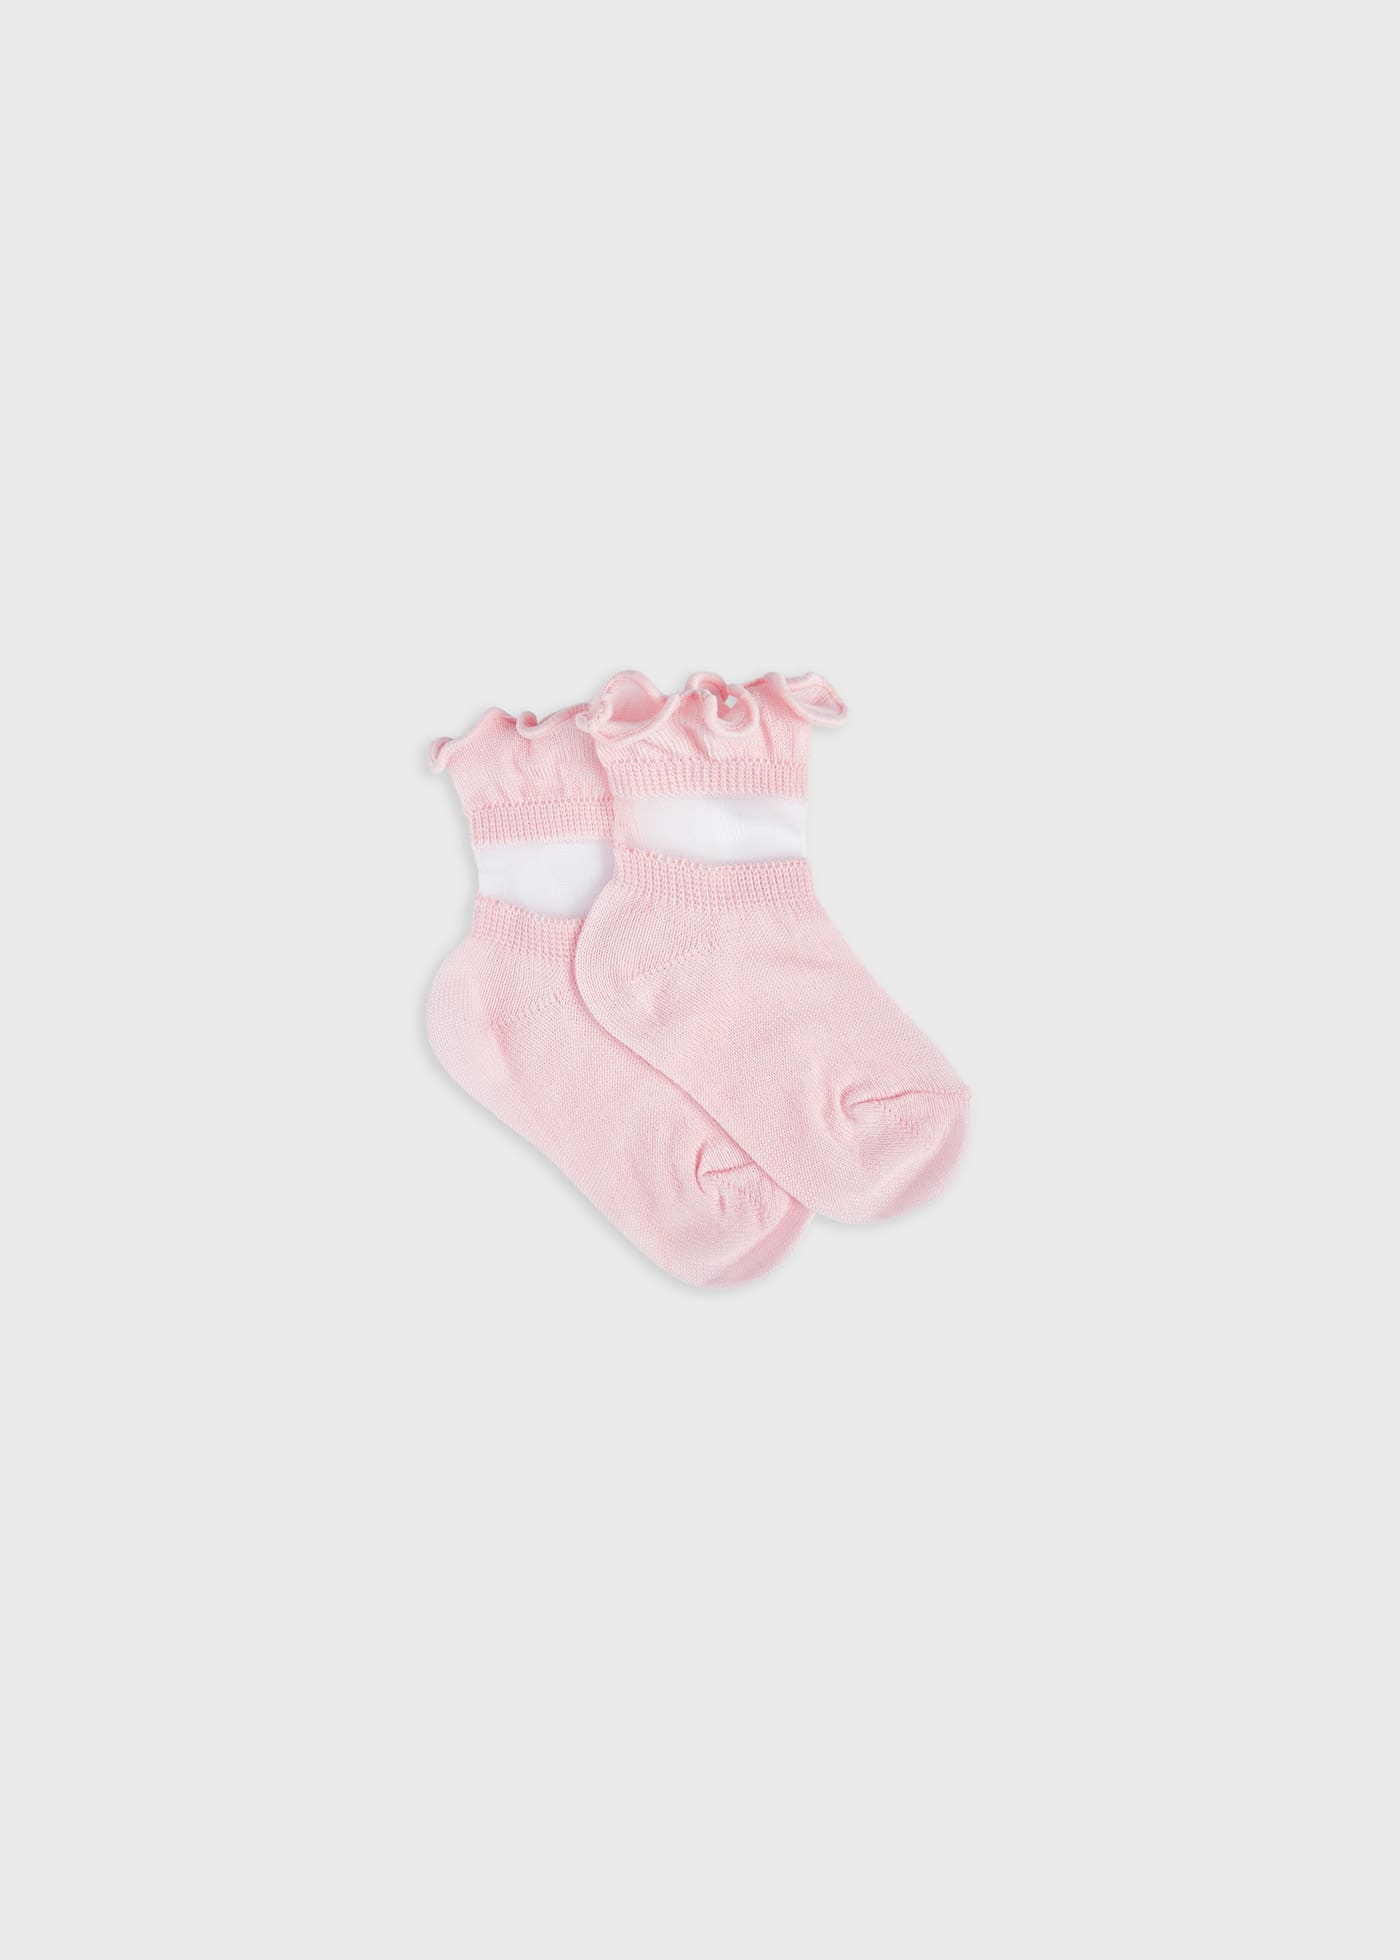 Story Loris - Girls White & Purple Ruffle Socks